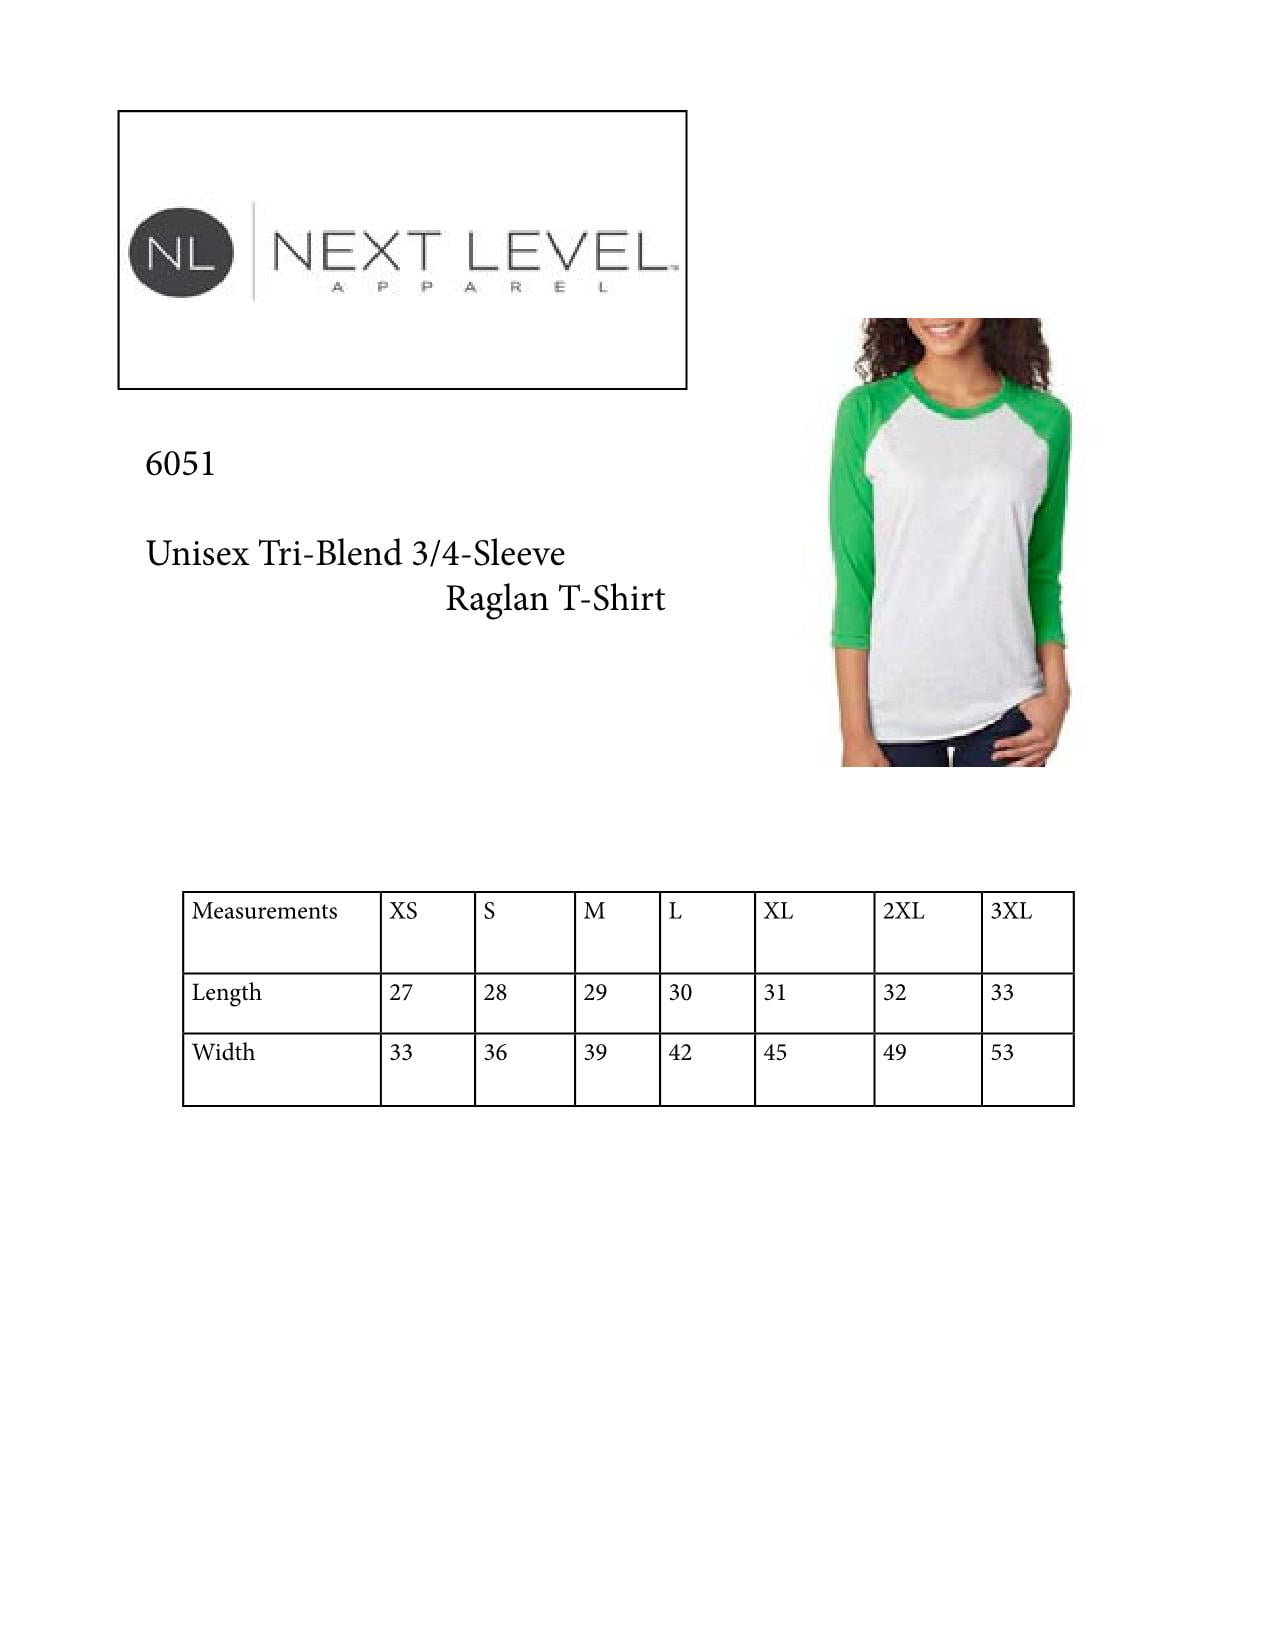 Next Level T Shirt Size Chart